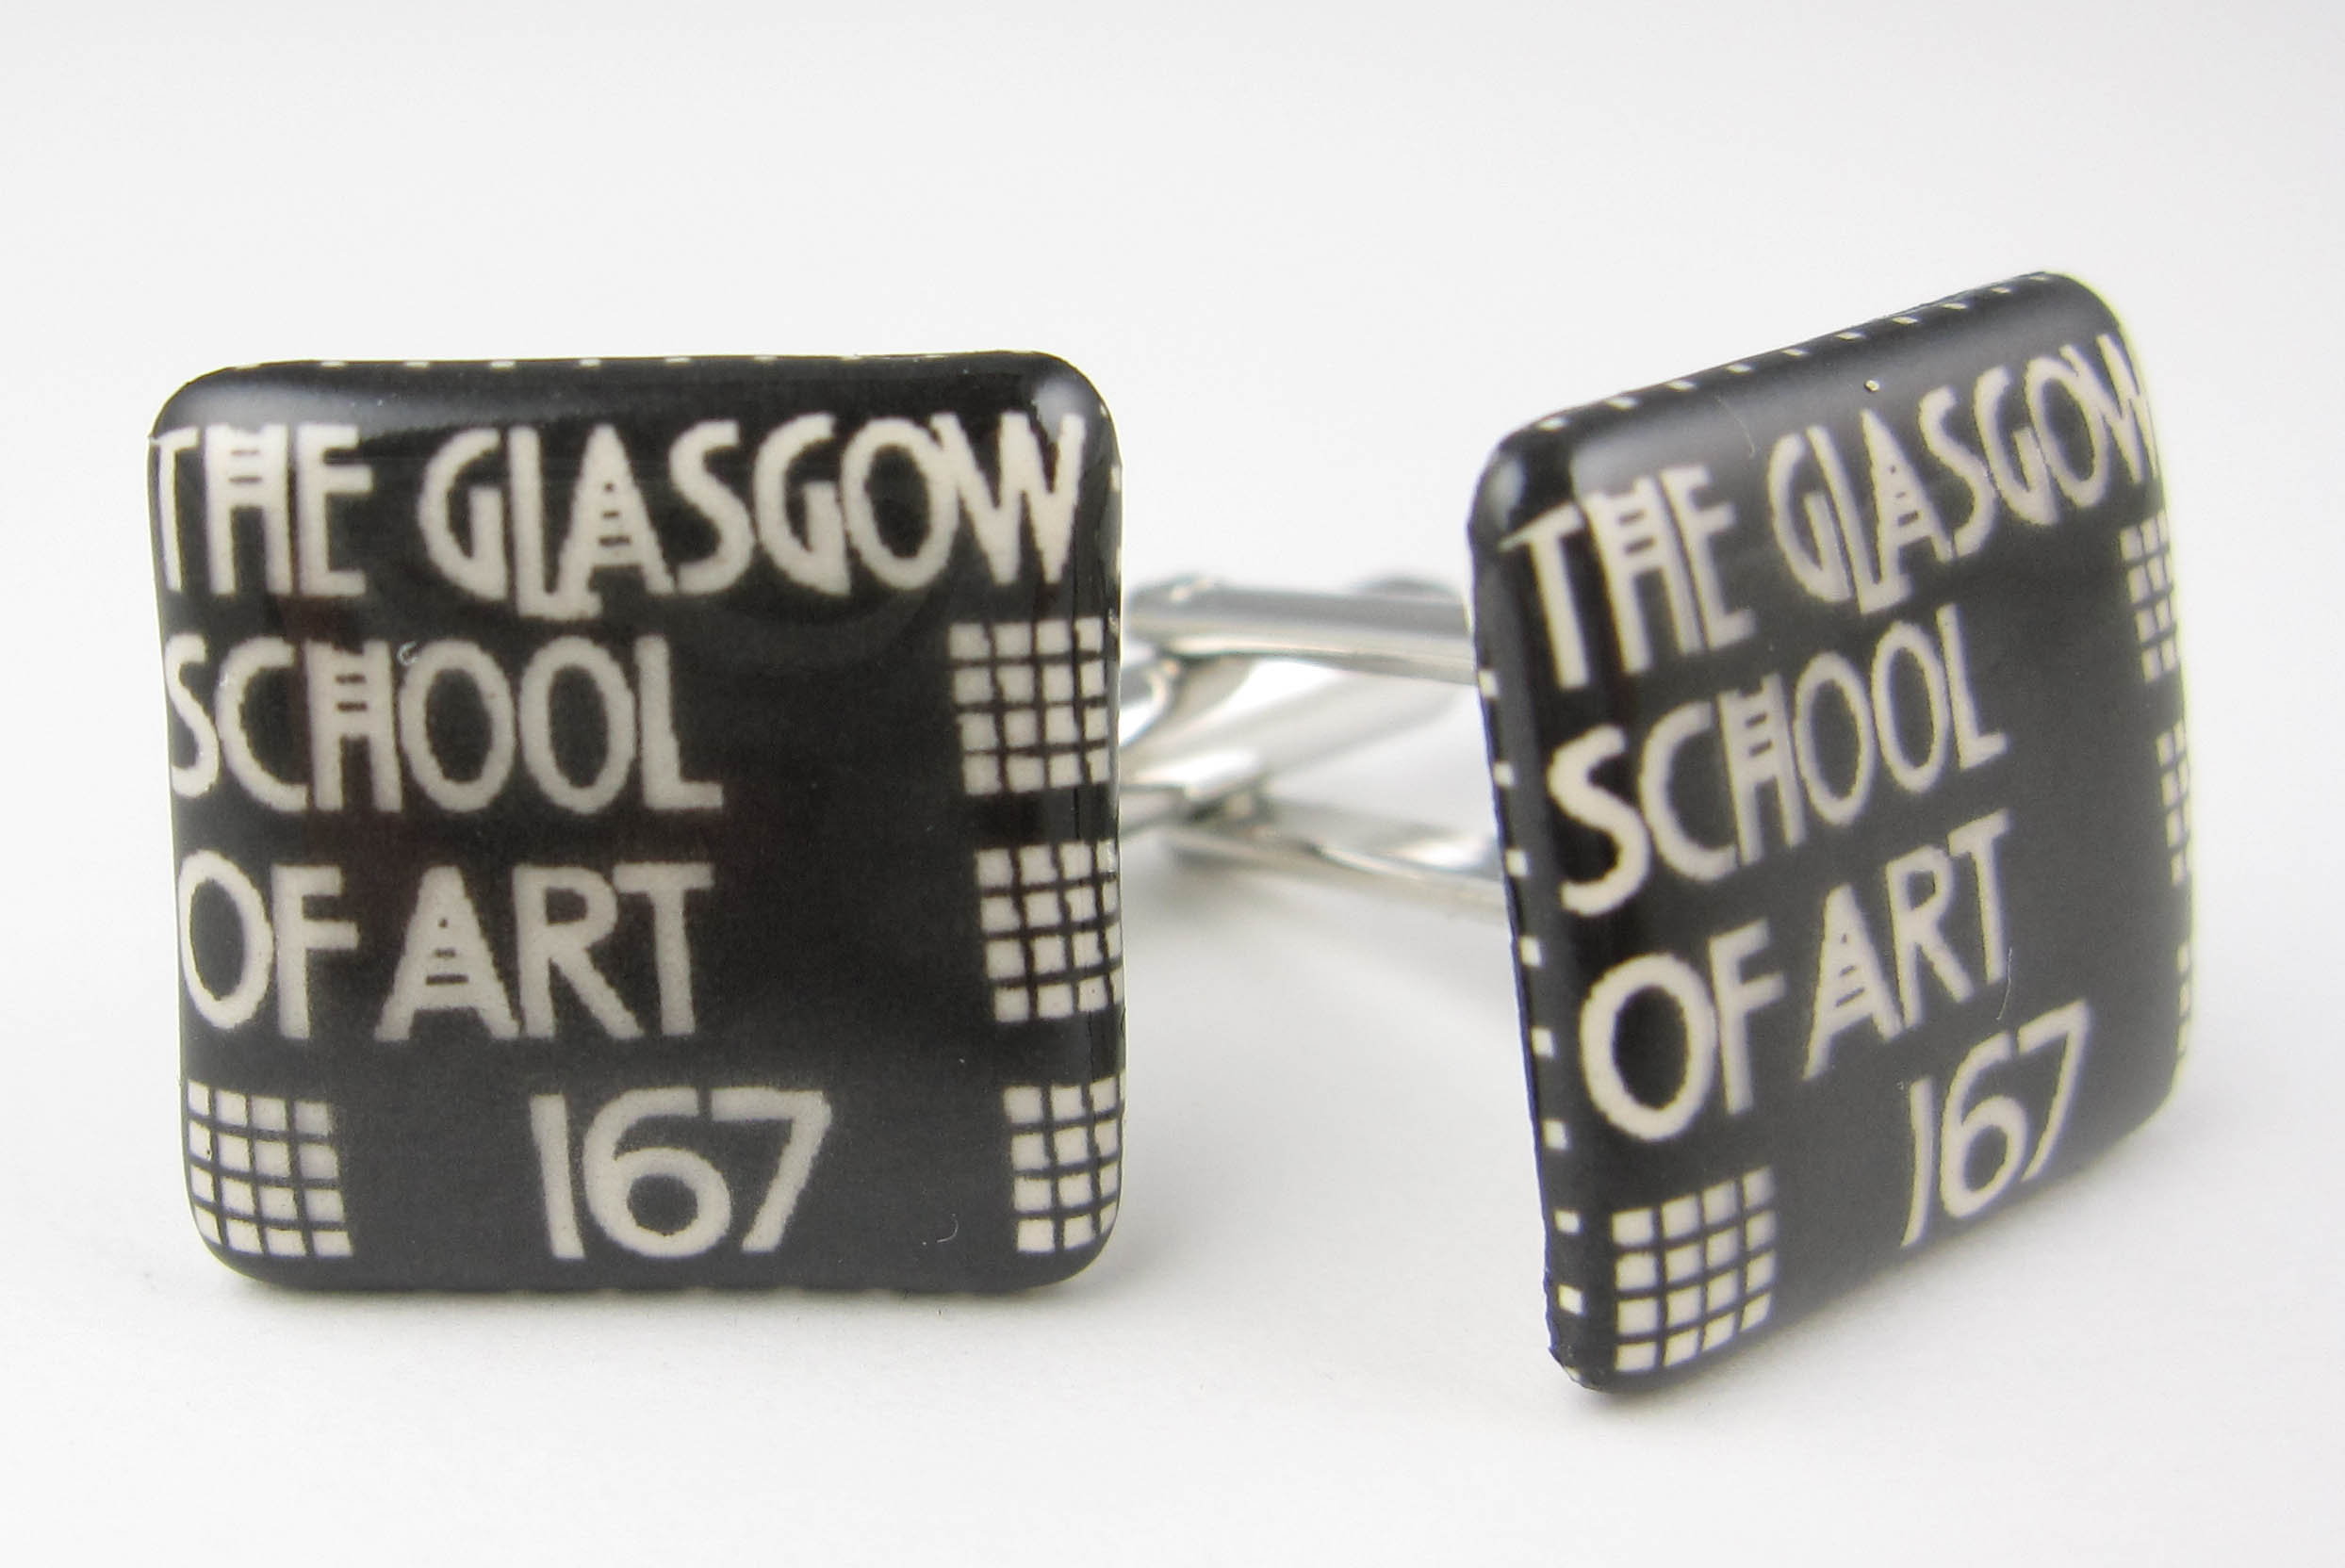 Iconic Scotland cufflinks